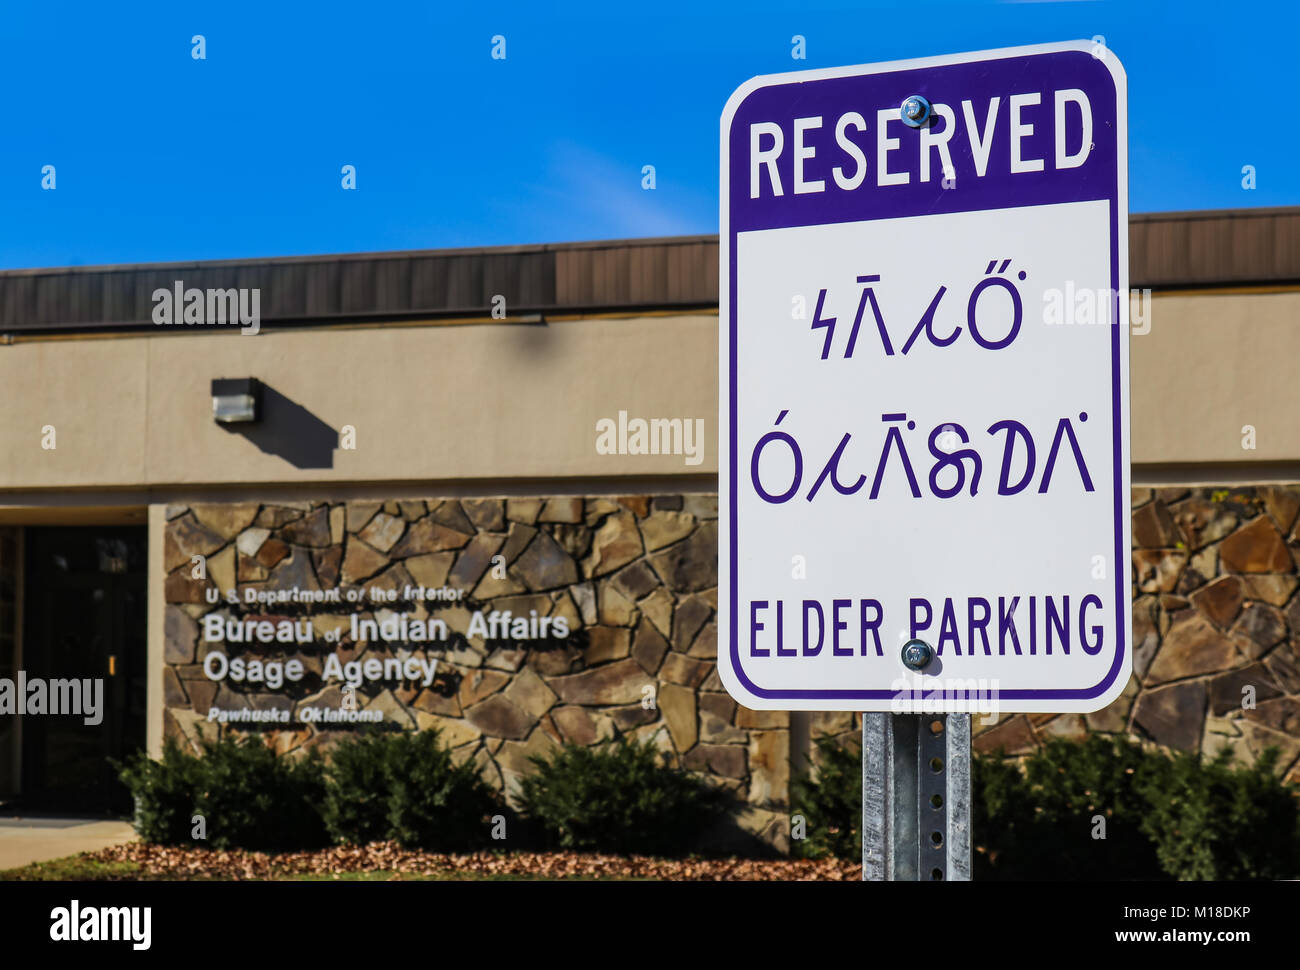 Reserved - Elder Parking sign in English and the Osage Indian Language (Wazhazhe) outside the Bureau of Indian Affairs Osage Agency in Pawhuska Oklaho Stock Photo